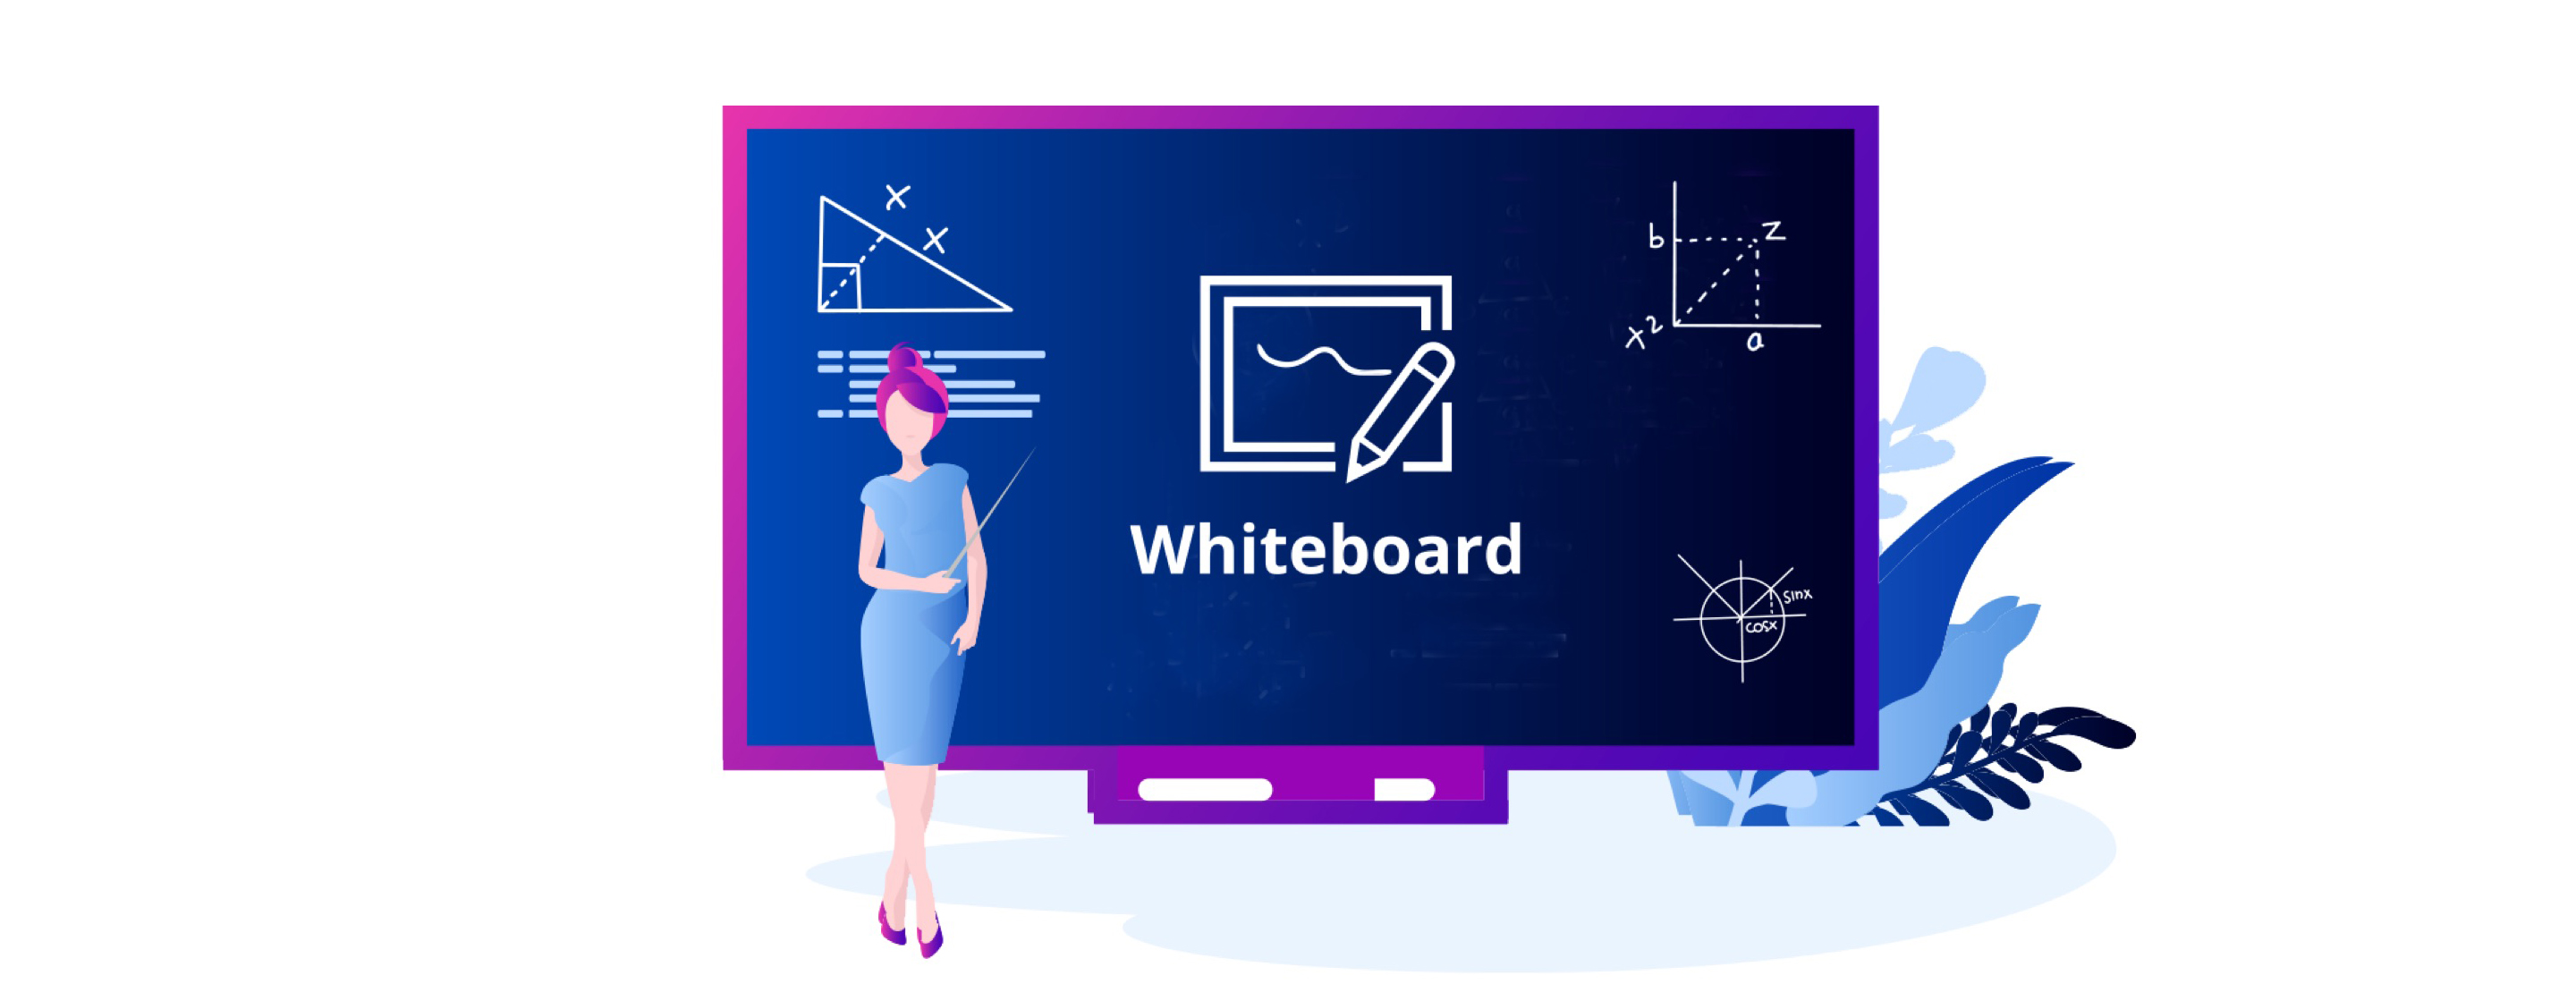 whiteboard_hero_center_x2